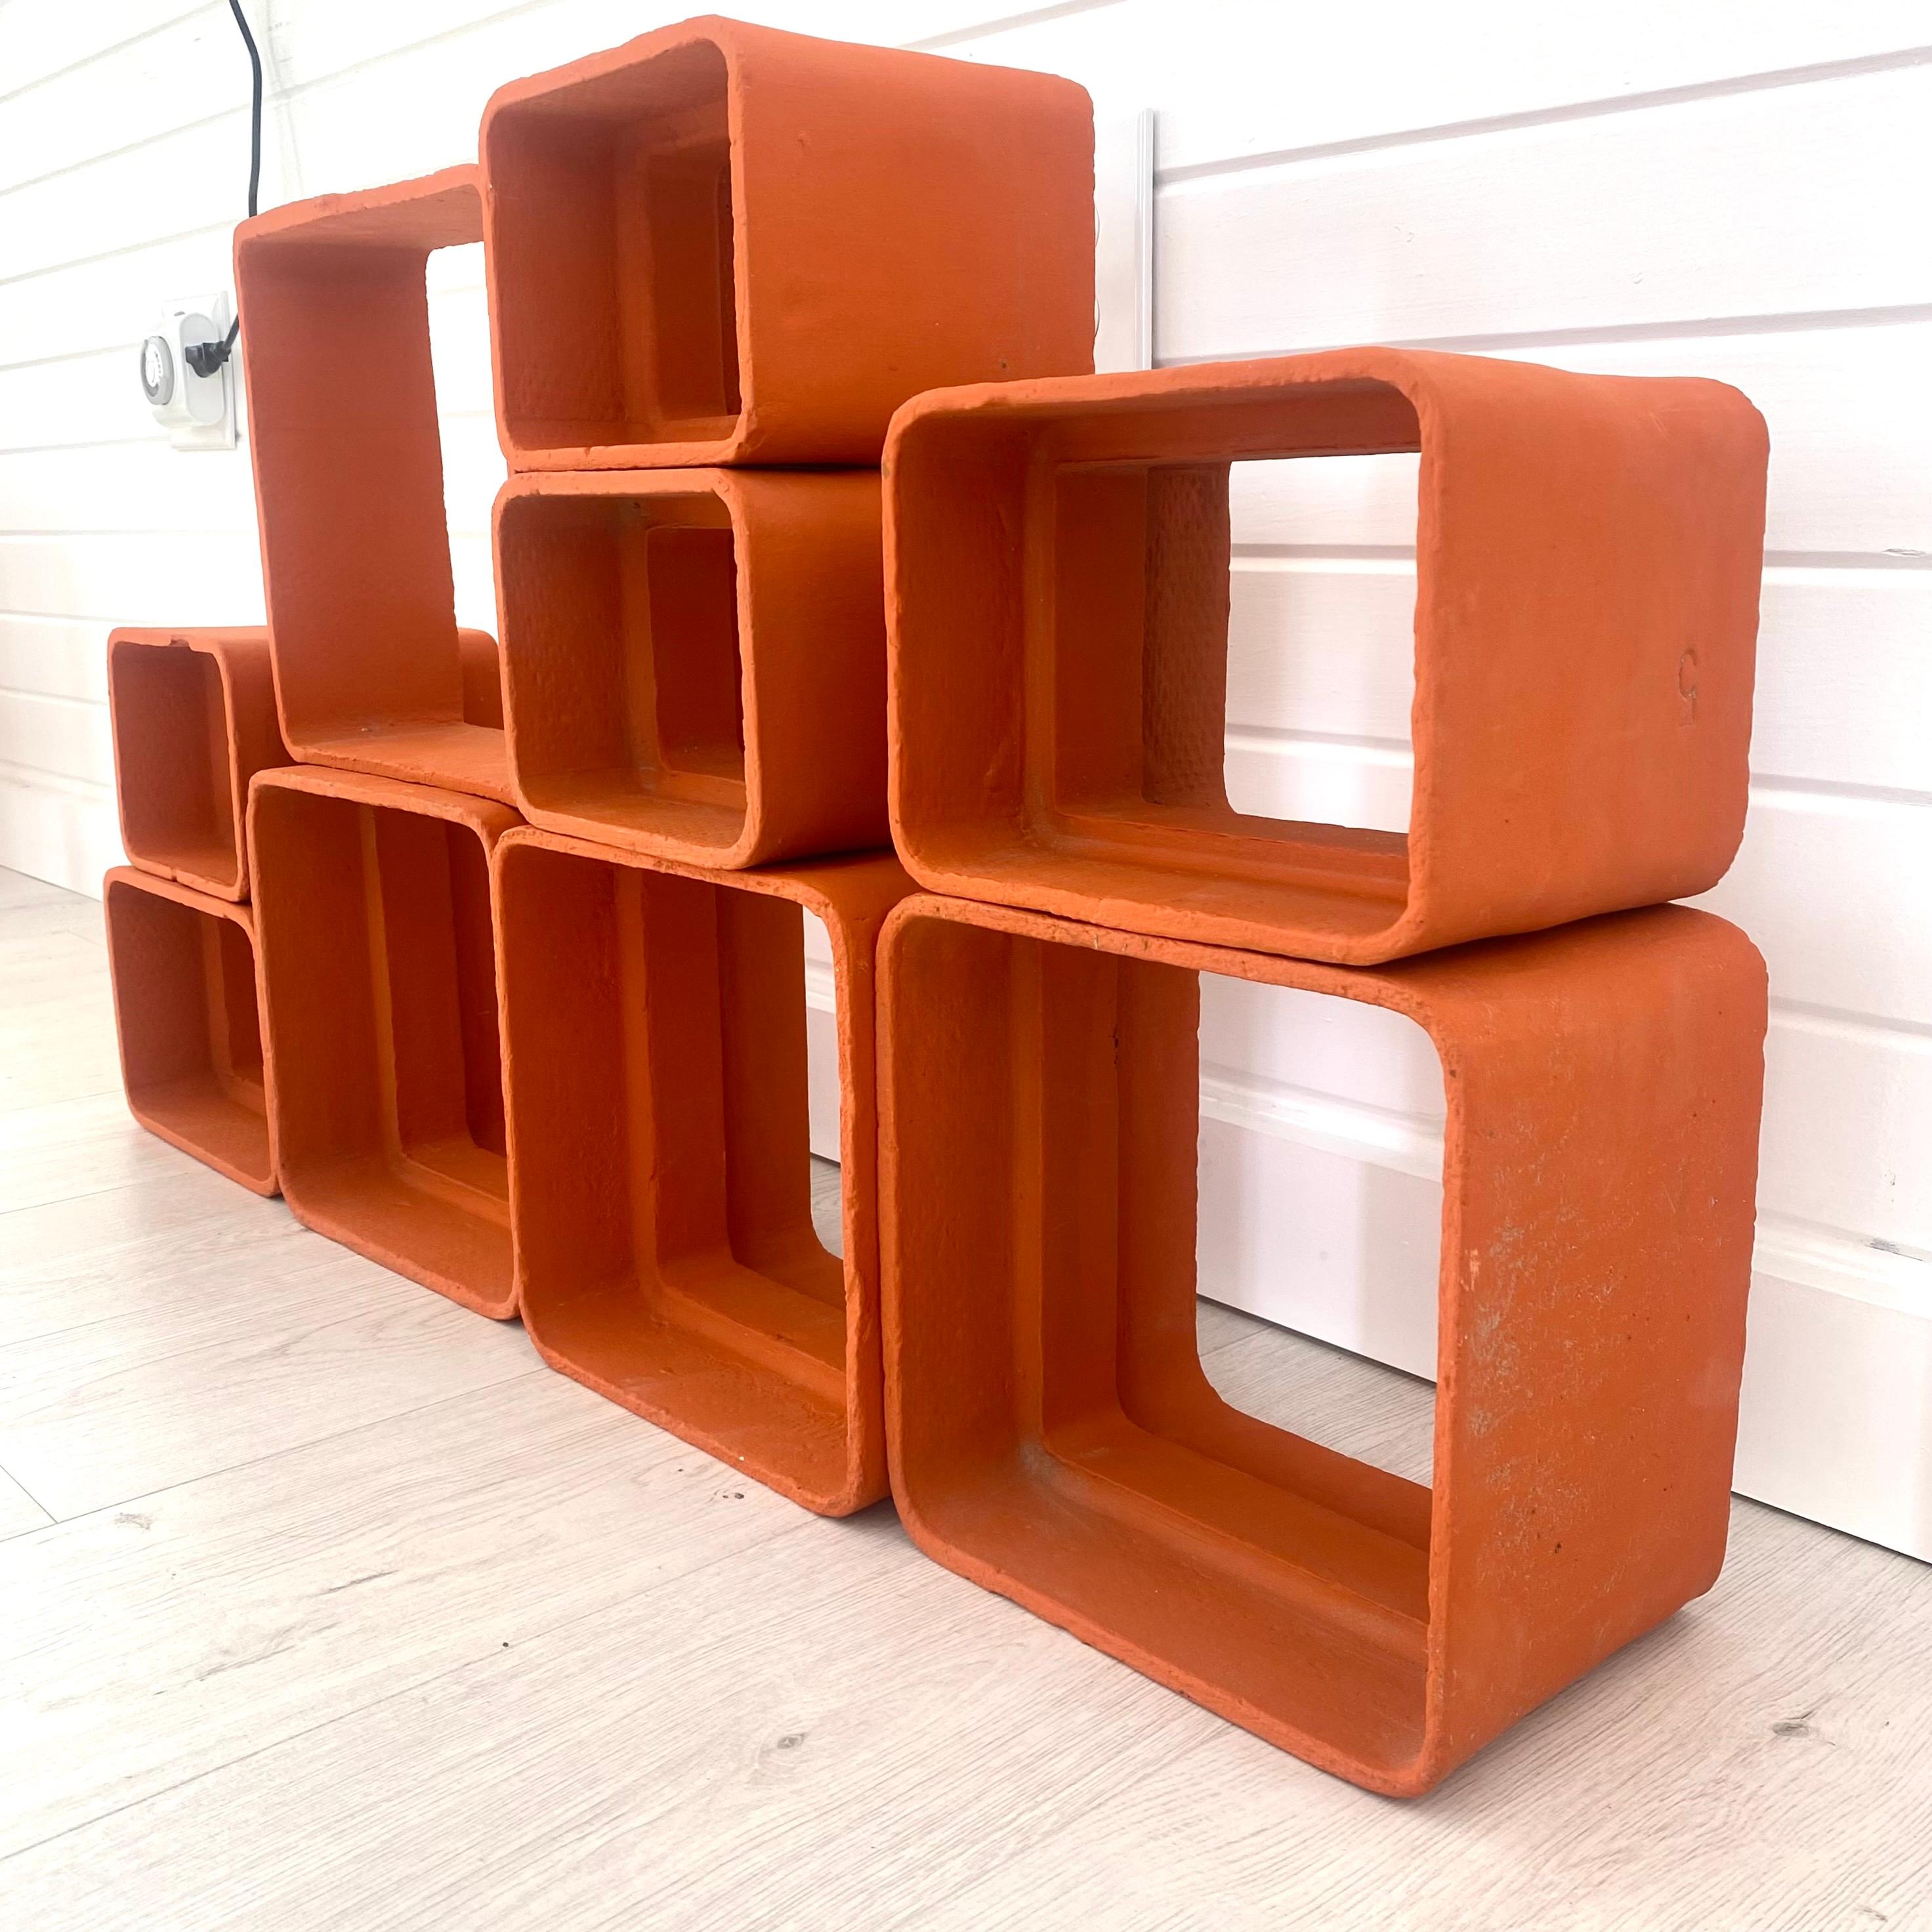 Swiss Willy Guhl Orange Concrete Bookcase, 1960s Switzerland For Sale